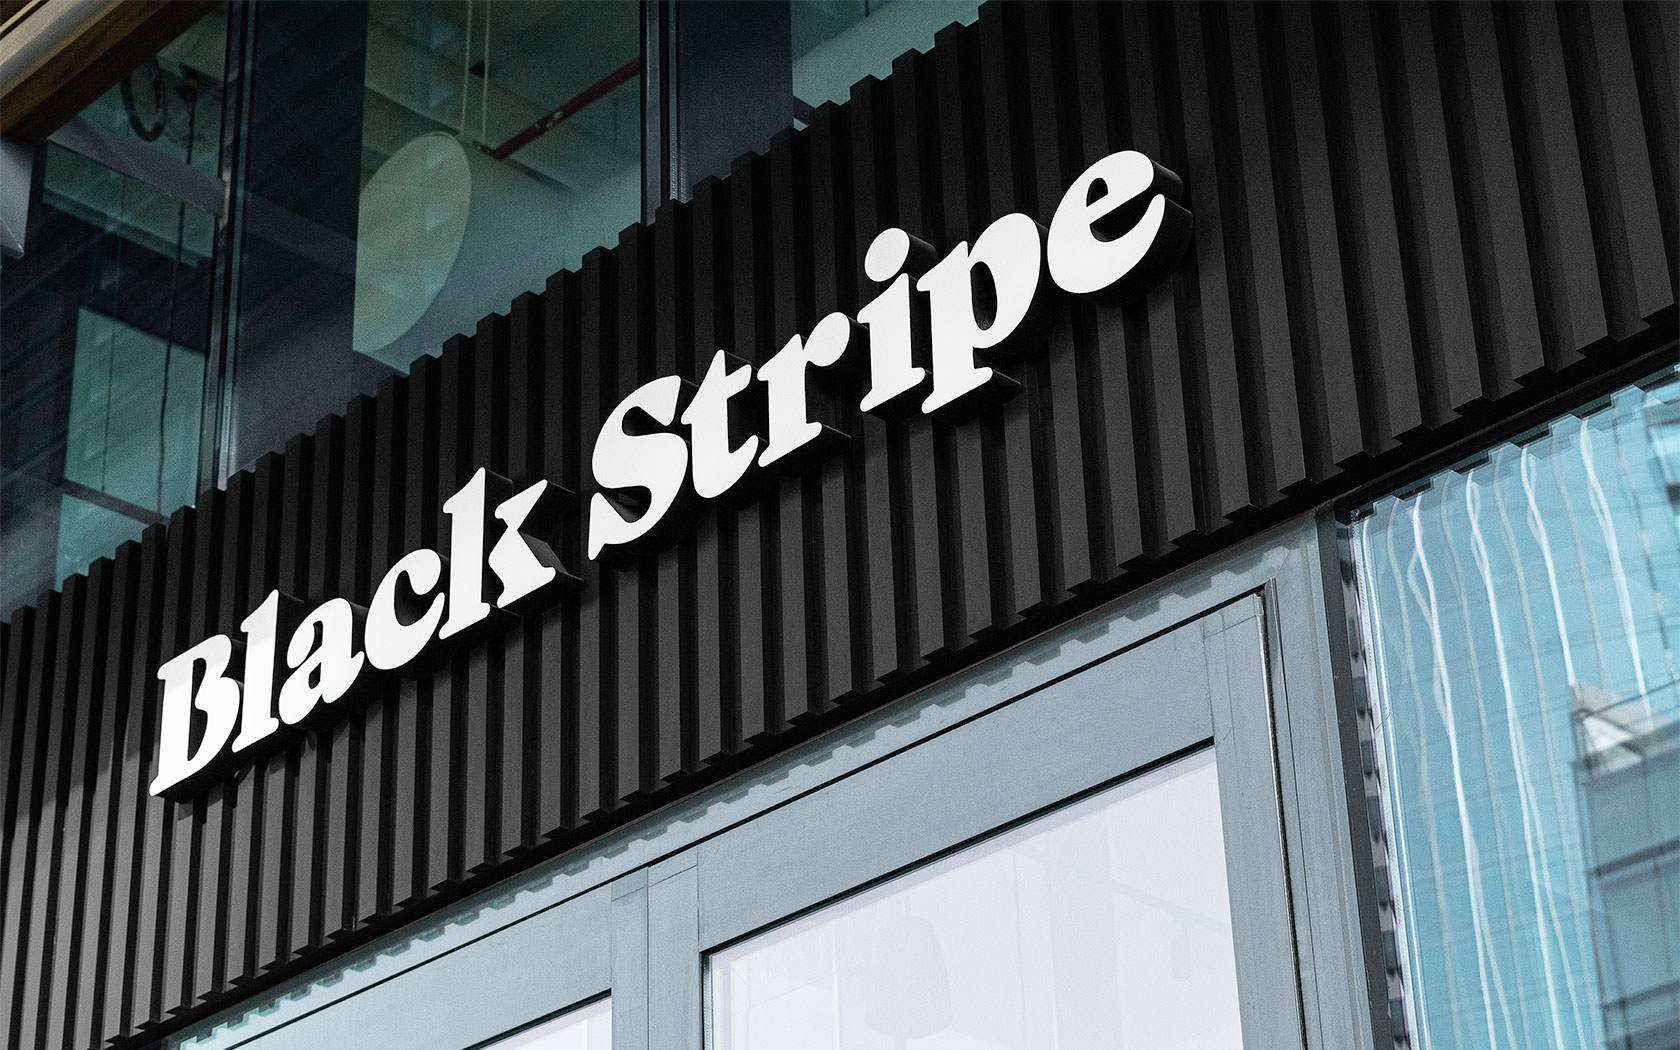 Black Stirpe. Logo sign